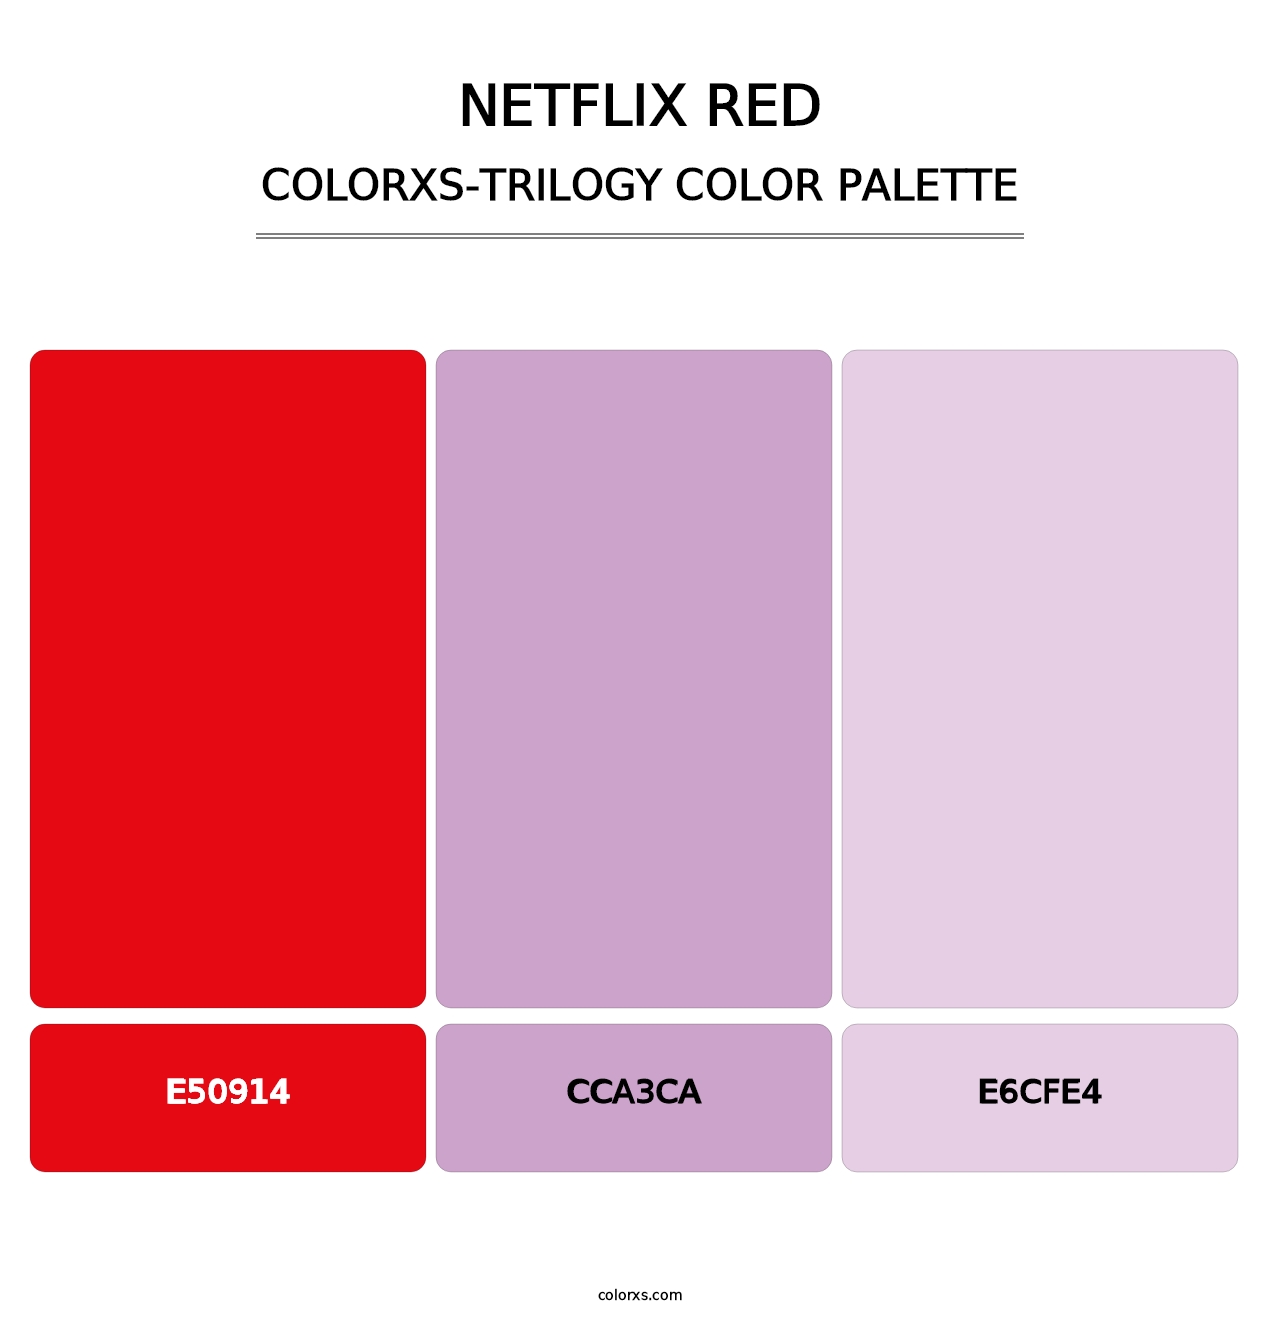 Netflix Red - Colorxs Trilogy Palette